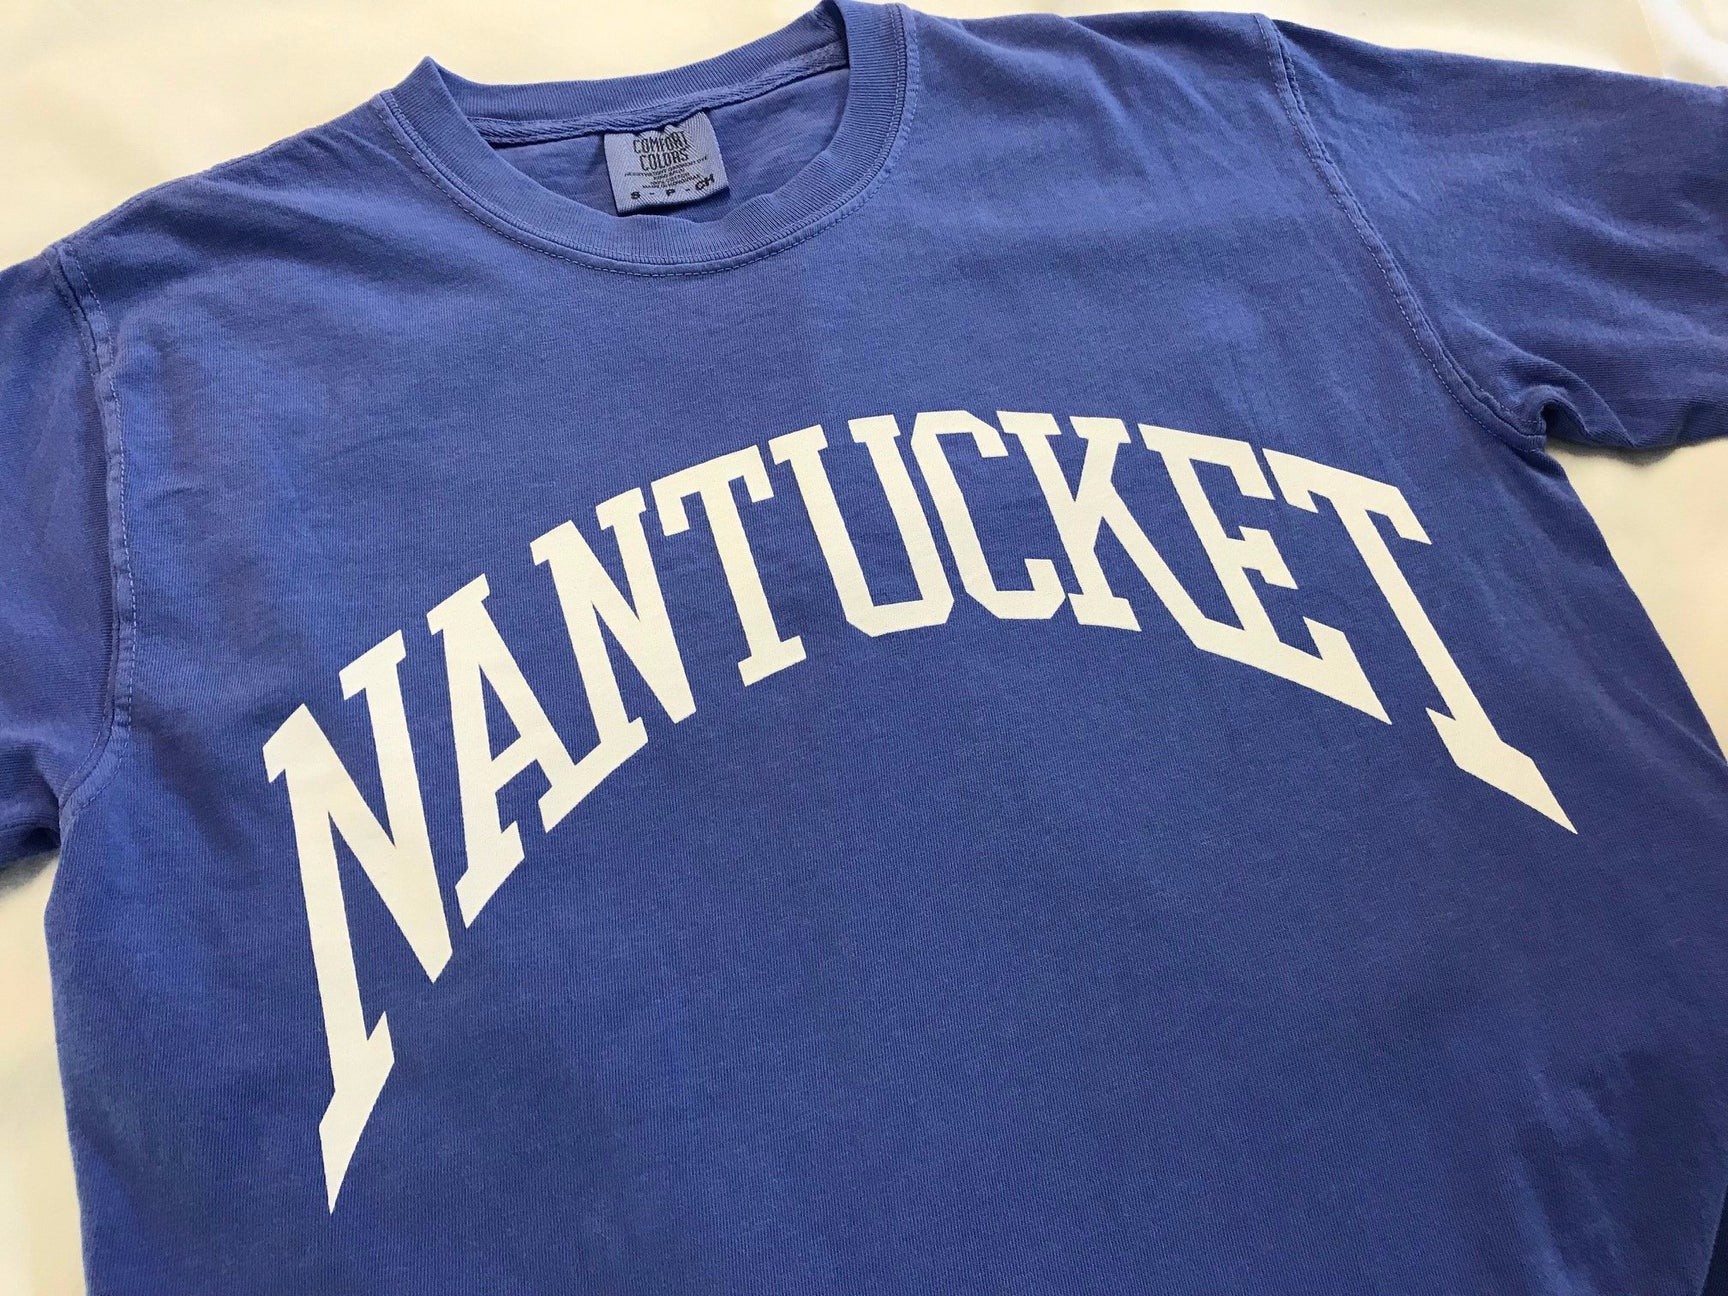 FEATURED 4 – university of nantucket